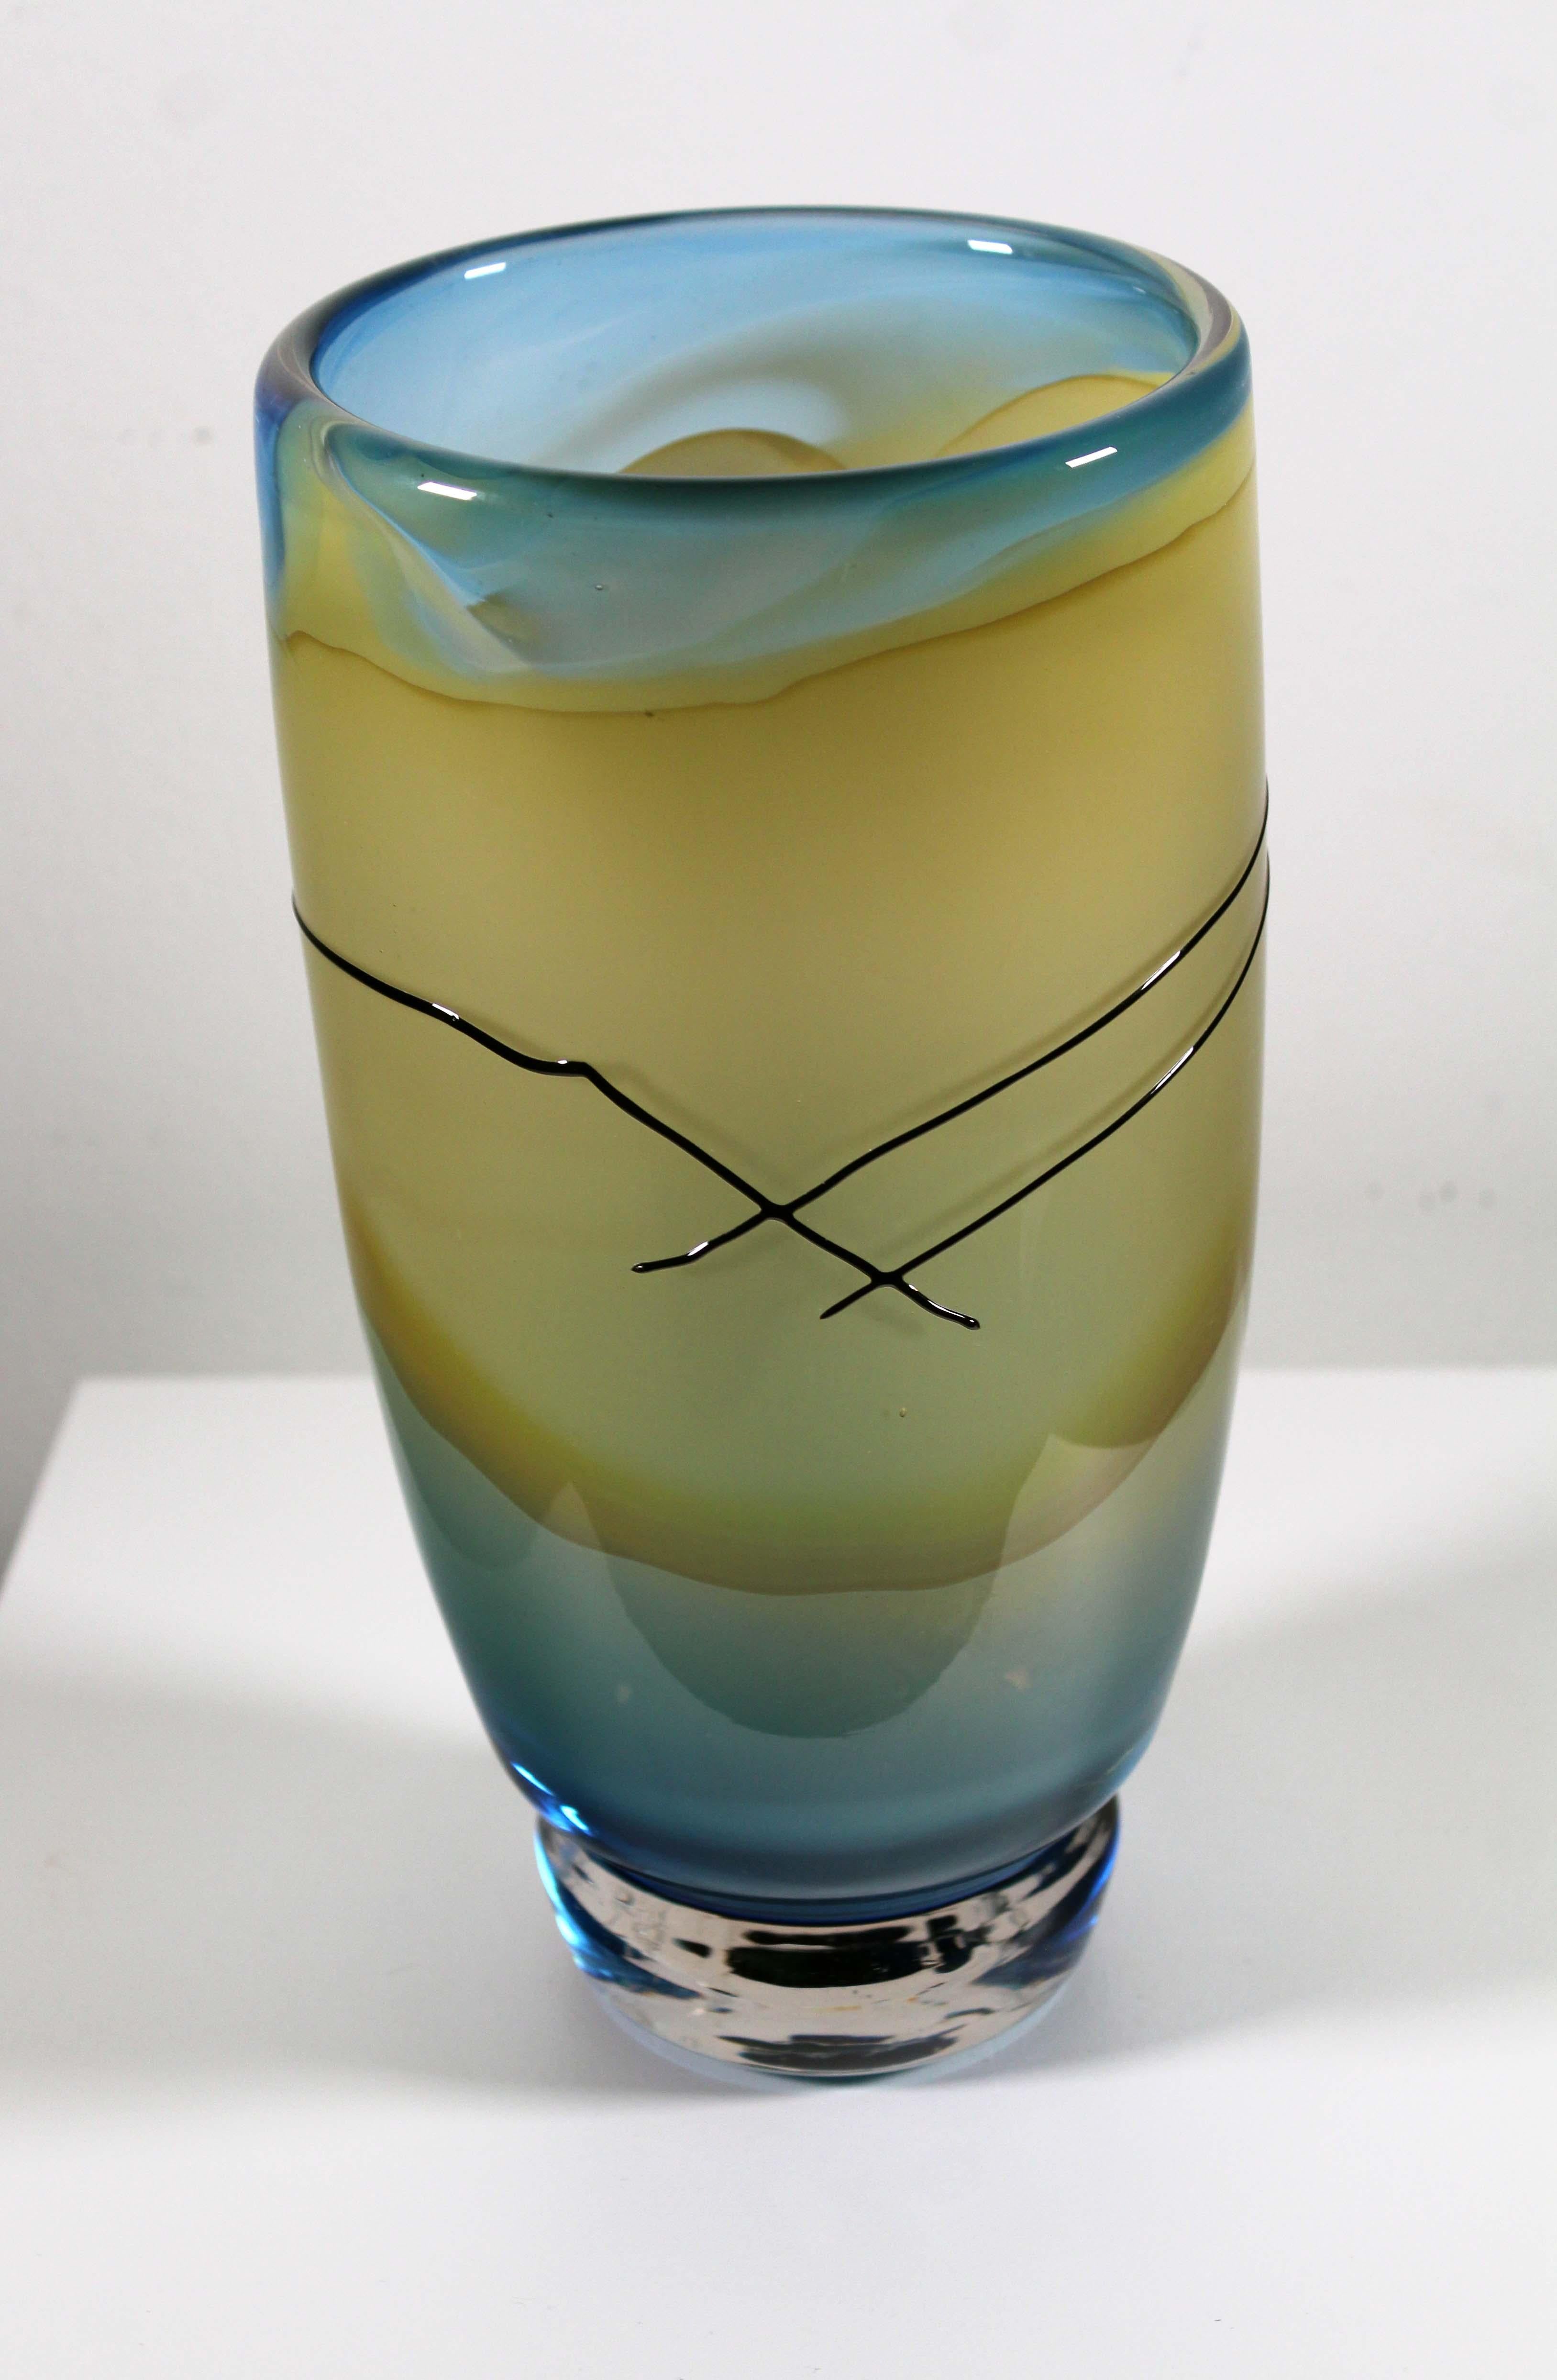 Jack Schmidt Postmodern Studio Handblown Glass Yellow and Blue Vase, 1986 For Sale 1